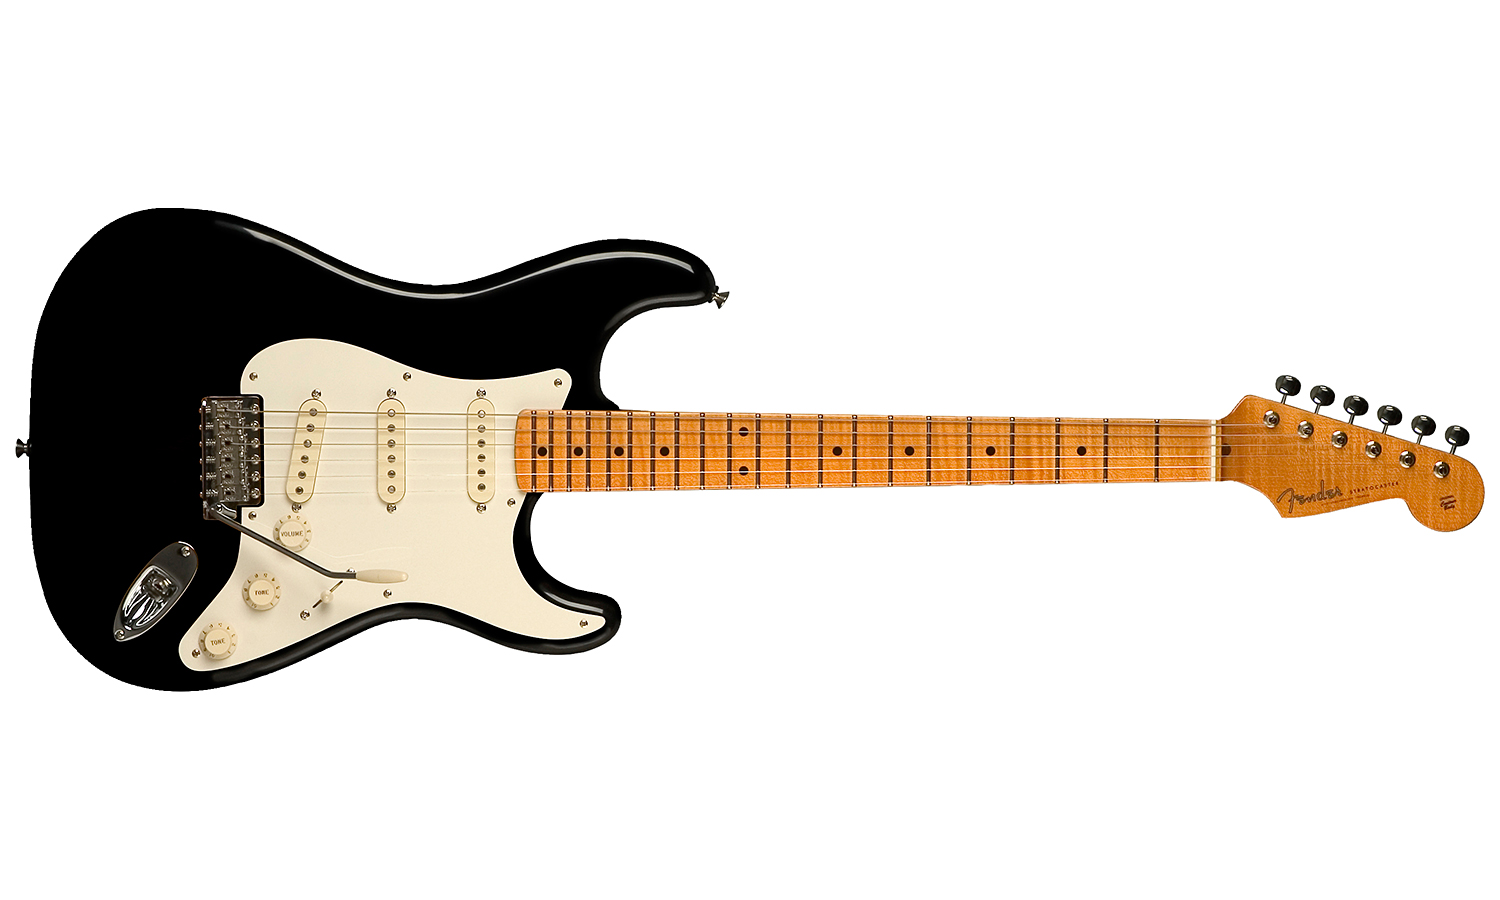 Fender Strat Eric Johnson Usa Signature Sss Mn - Black - Guitarra eléctrica con forma de str. - Variation 1